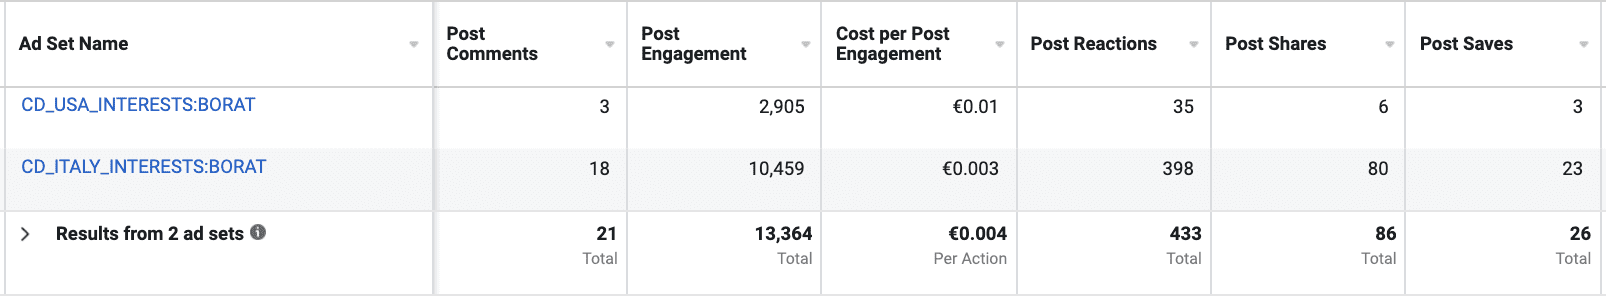 Melograno & Borat Marketing Campaign - Soft Metrics - Post Engagement